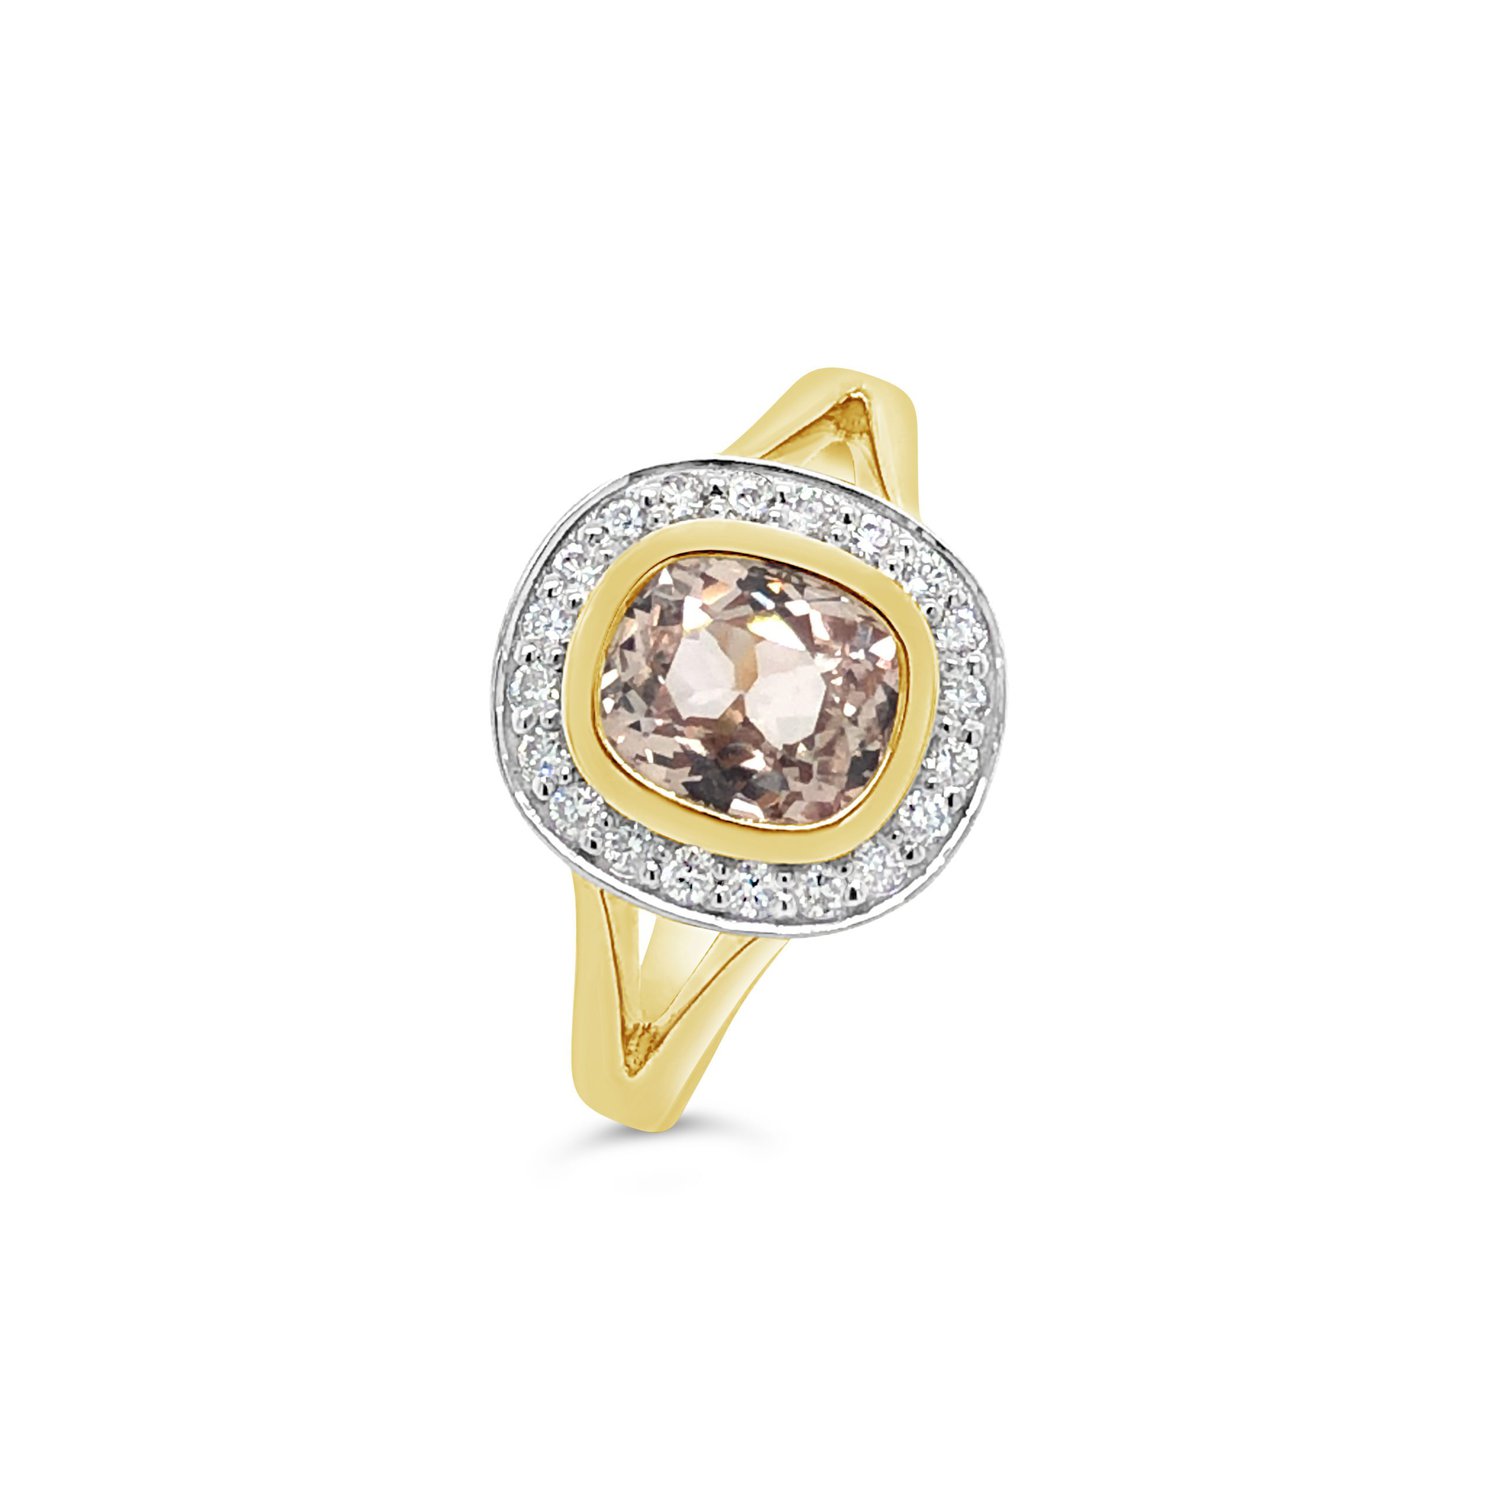 Peach Sapphire And Diamond Ring 9ct Gold Adeline Knight Design_0